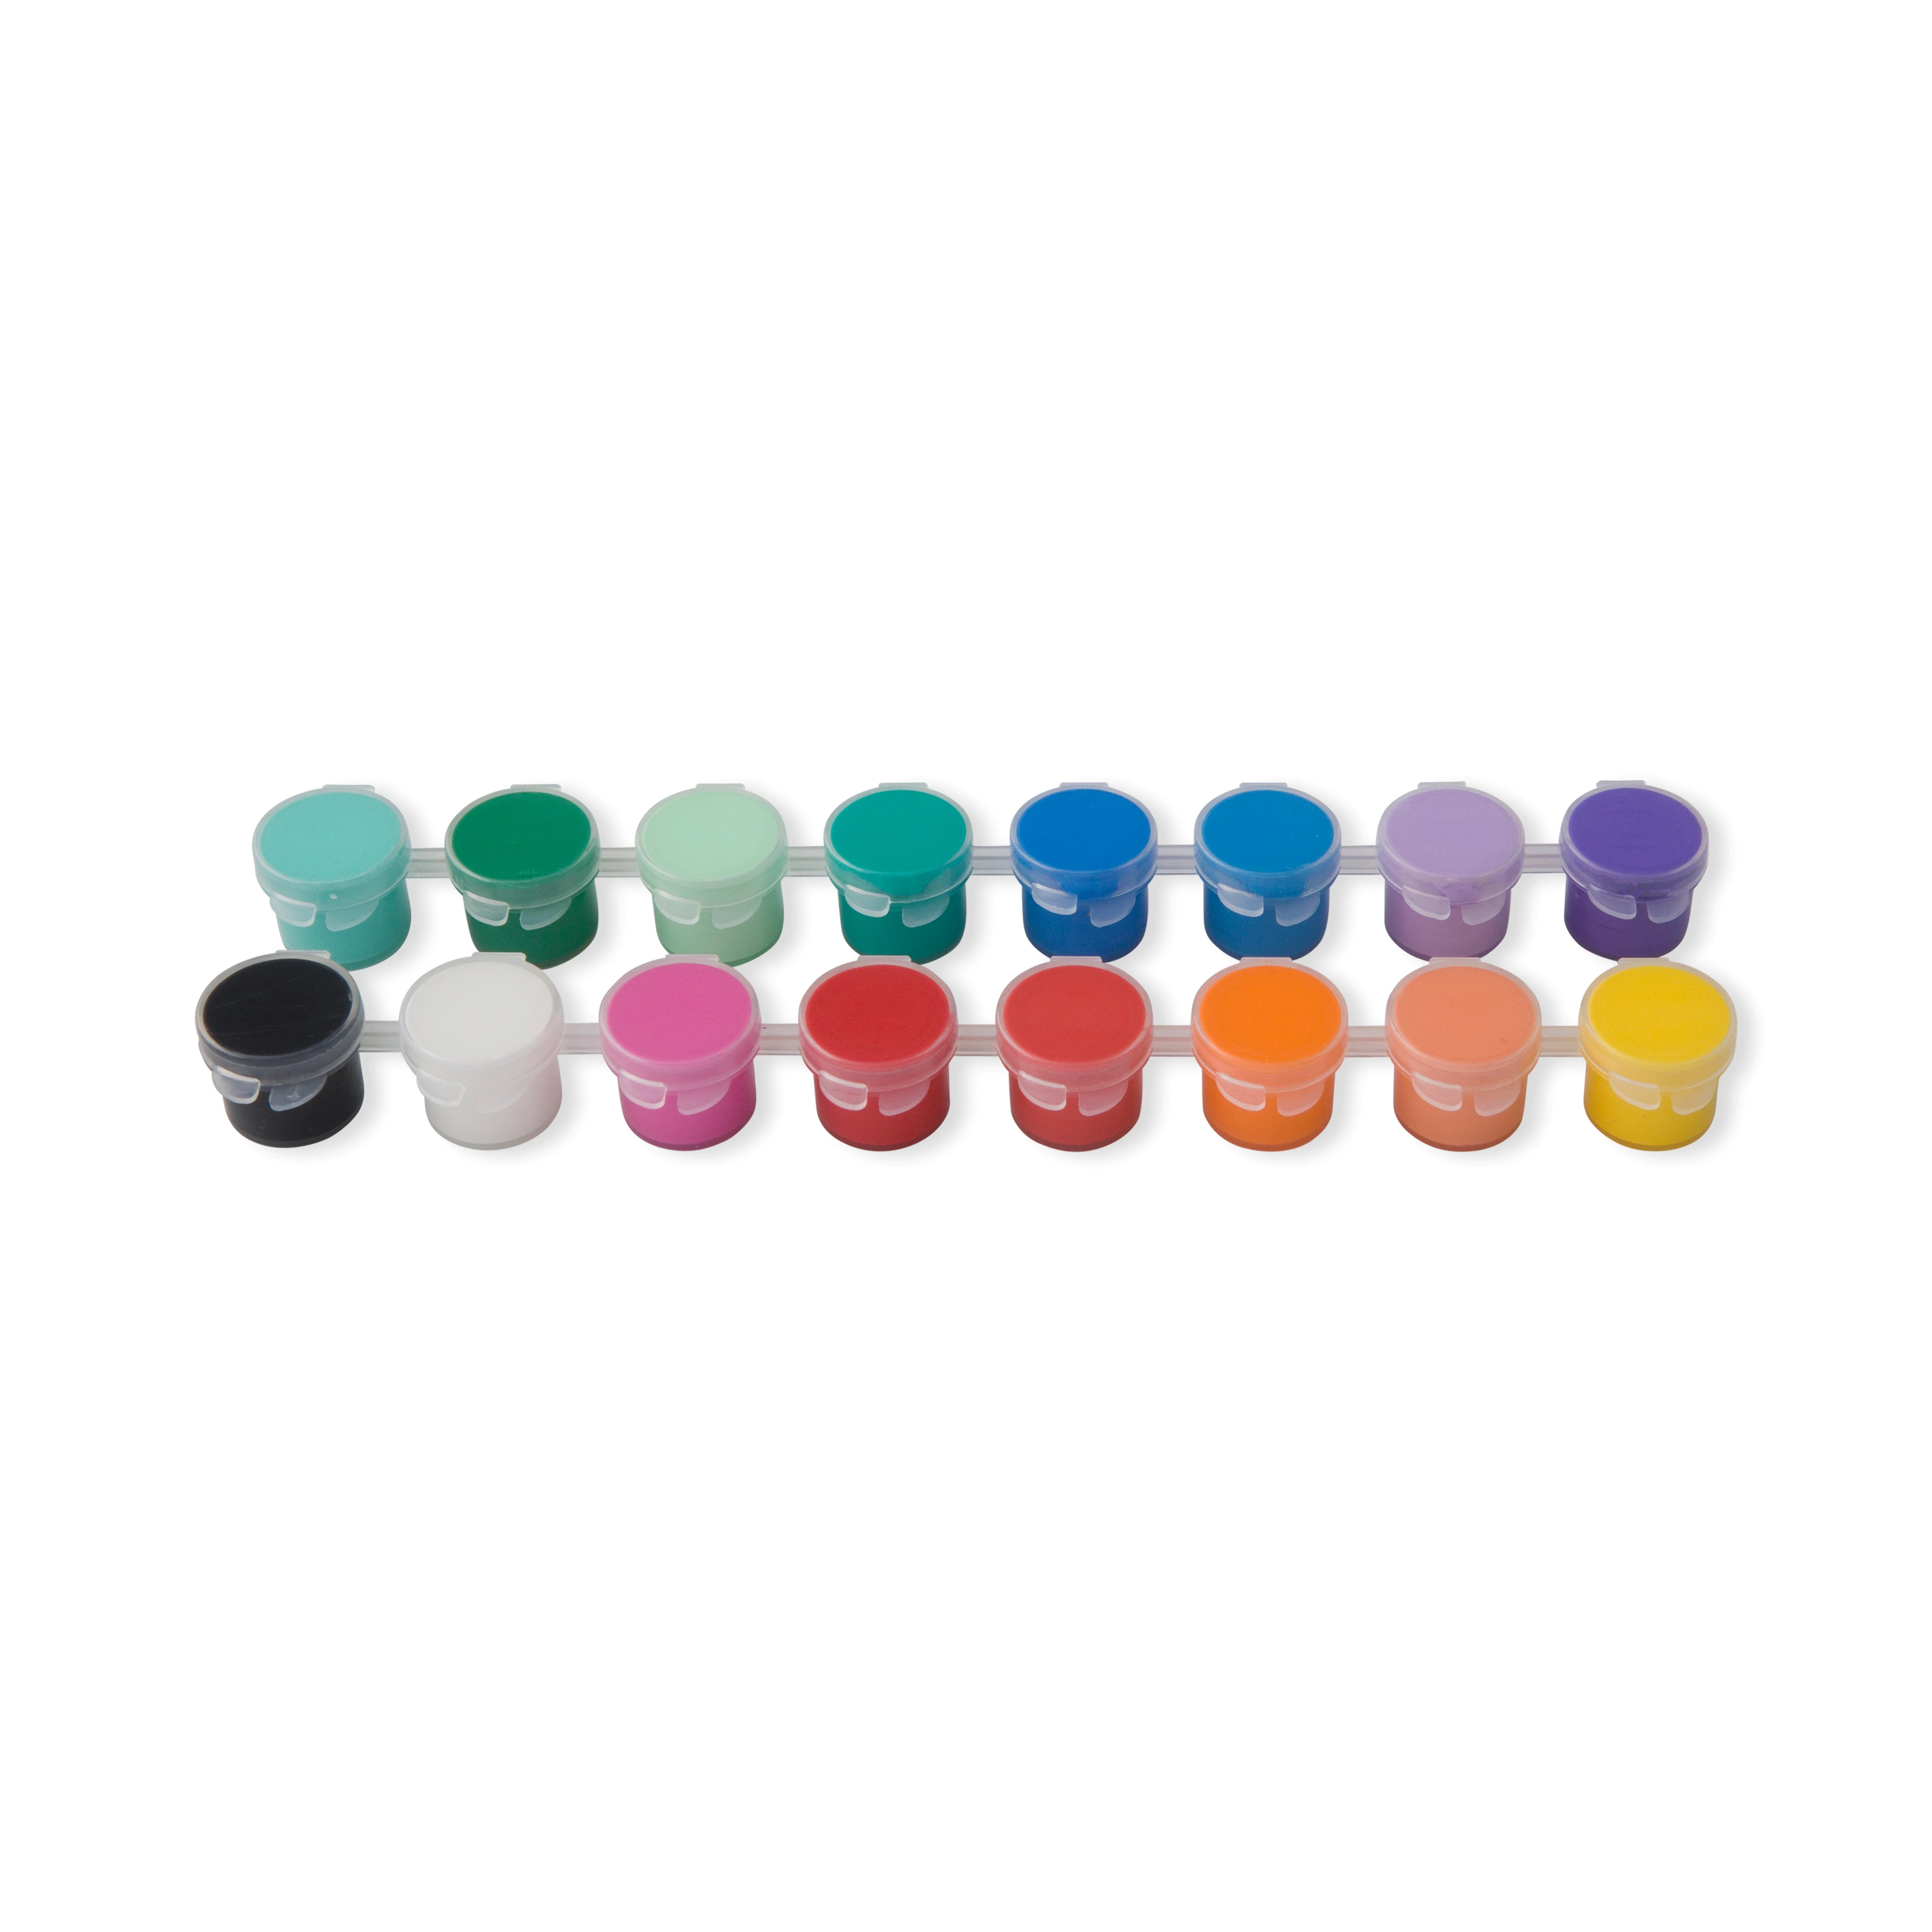 24 Color Resin Pigment Ink Set by Craft Smart®